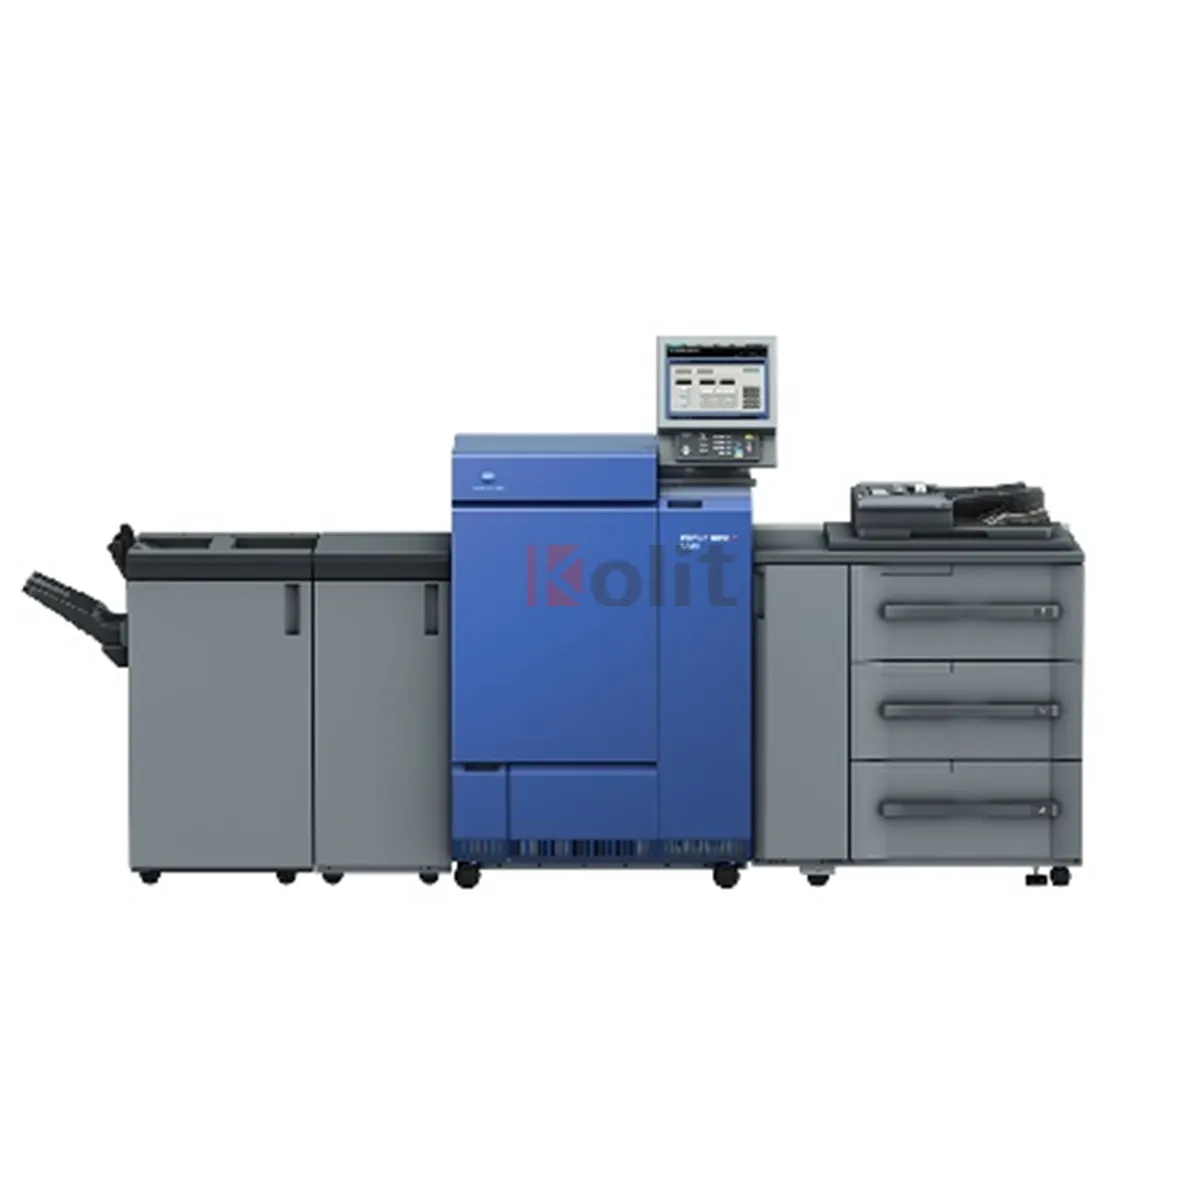 Iyi Recondition renk fotokopi makinesi Bizhub basın C1085 yazıcı TN622 toner kartuşu ile Bizhub fotokopi makinesi